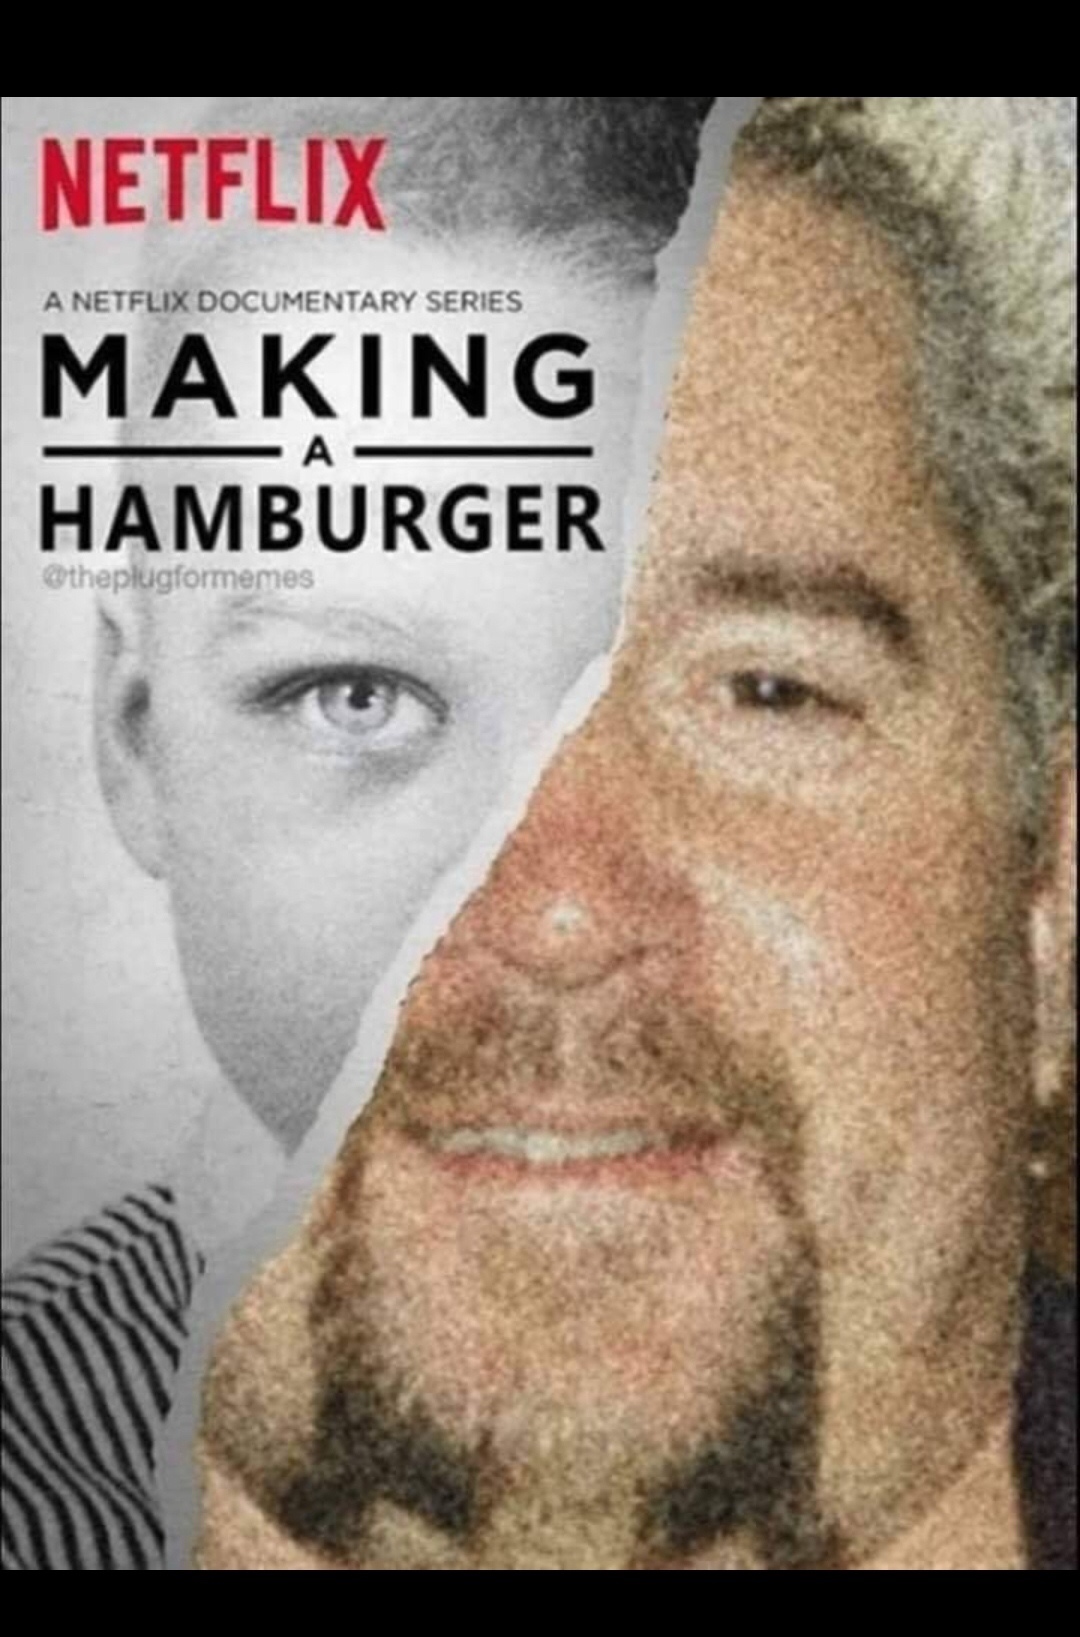 guy fieri memes - Netflix A Netflix Documentary Series Making Hamburger